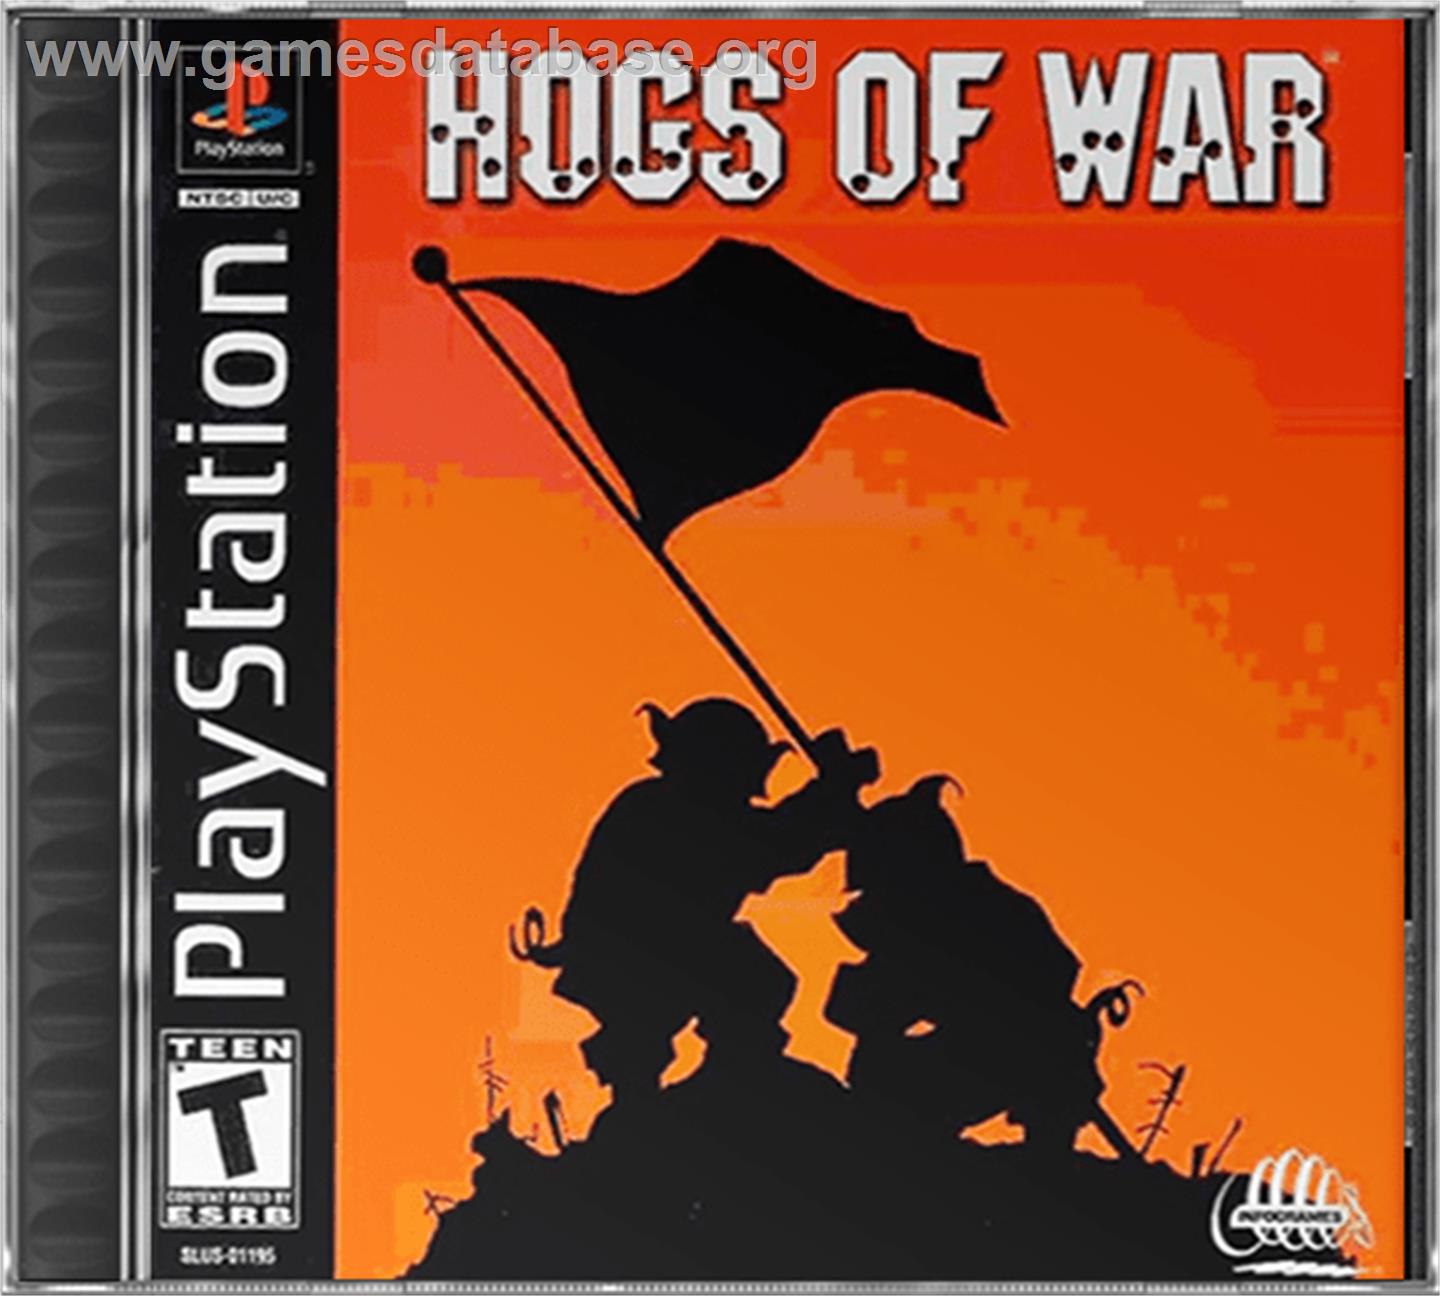 Hogs of War / Worms - Sony Playstation - Artwork - Box